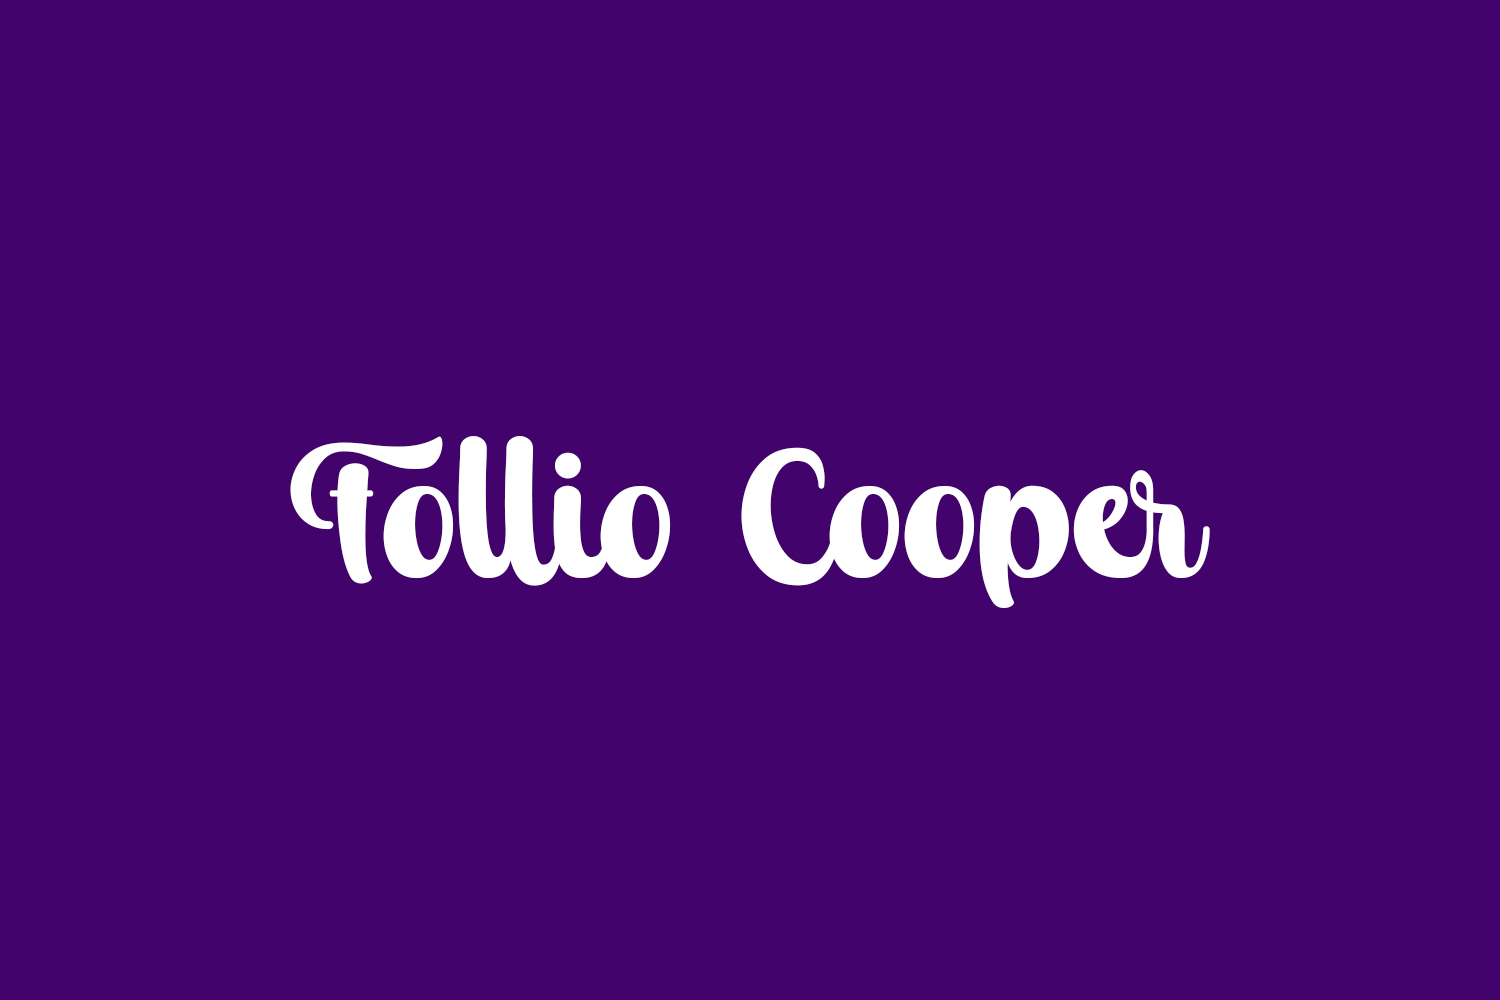 Follio Cooper Free Font